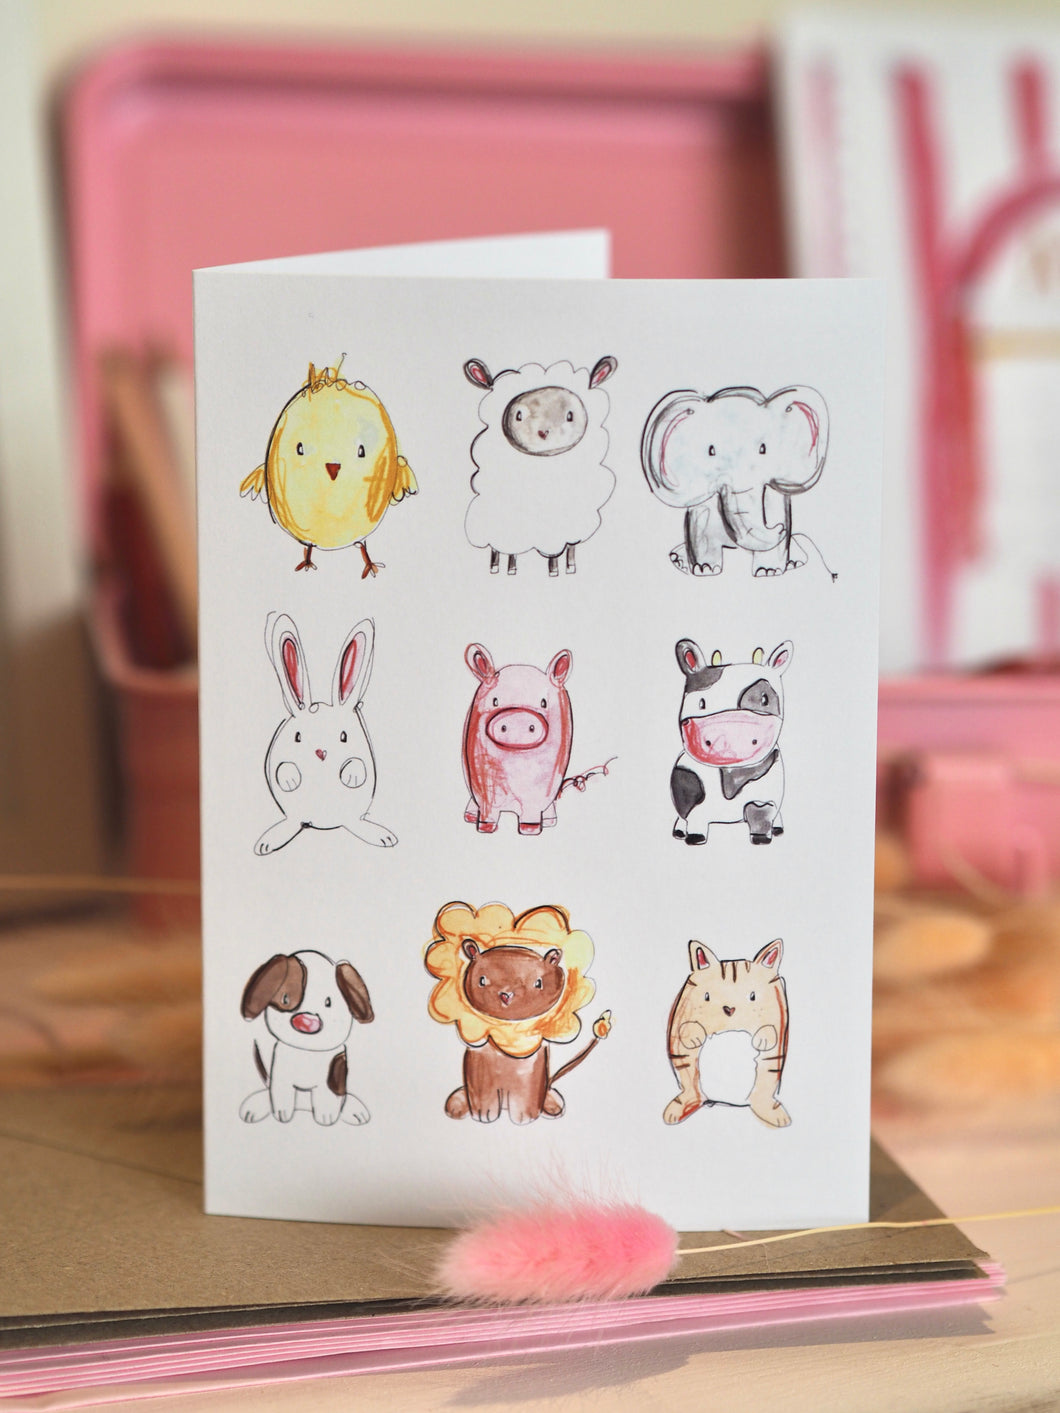 Animals Greetings Card